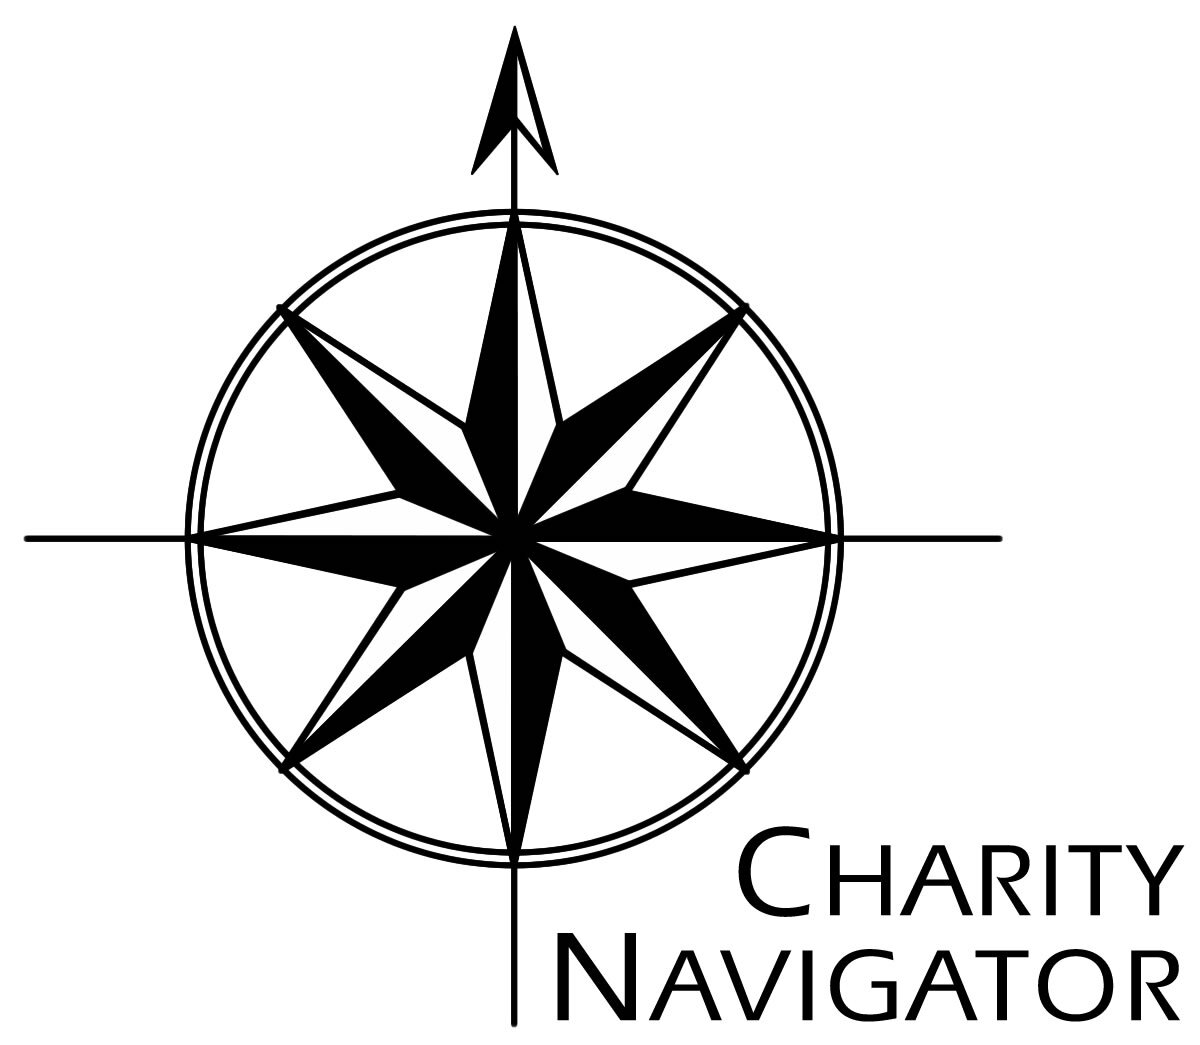 Charity Navigator logo.jpg